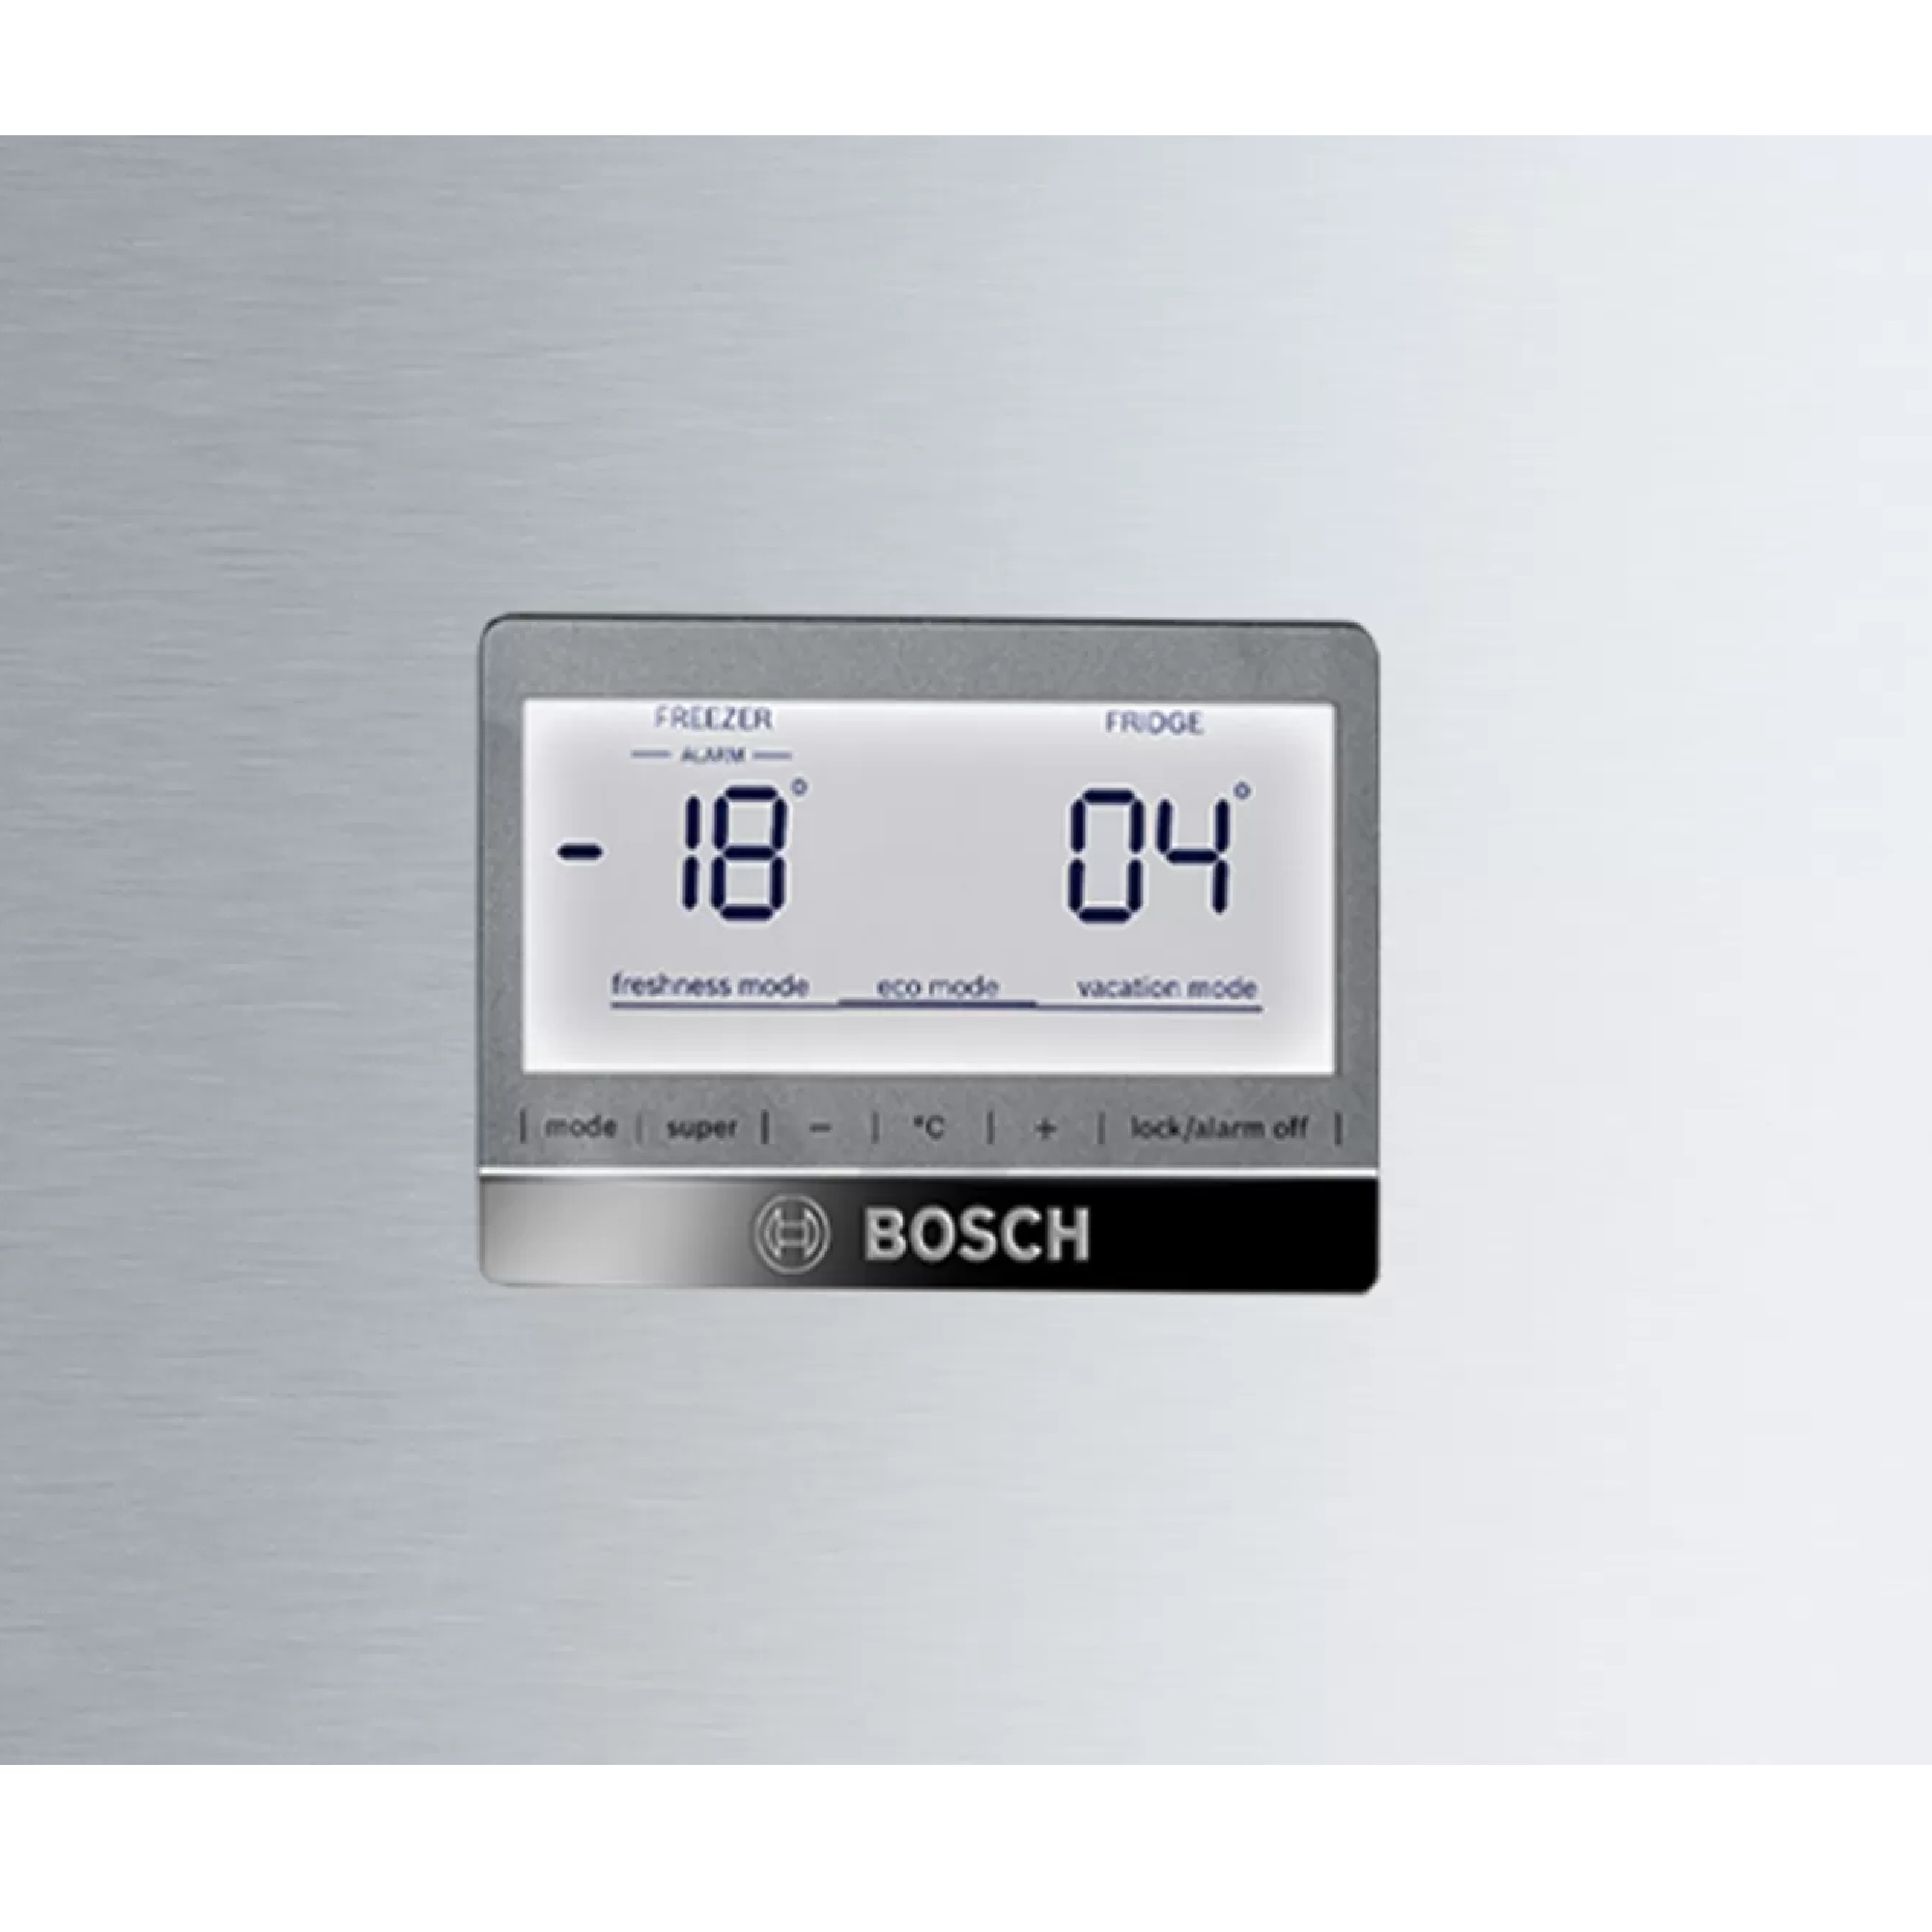 Бош аларм. Kgn49mi20r. Bosch kgn49mi20r. KGN 70. Холодильник бош Alarm off.